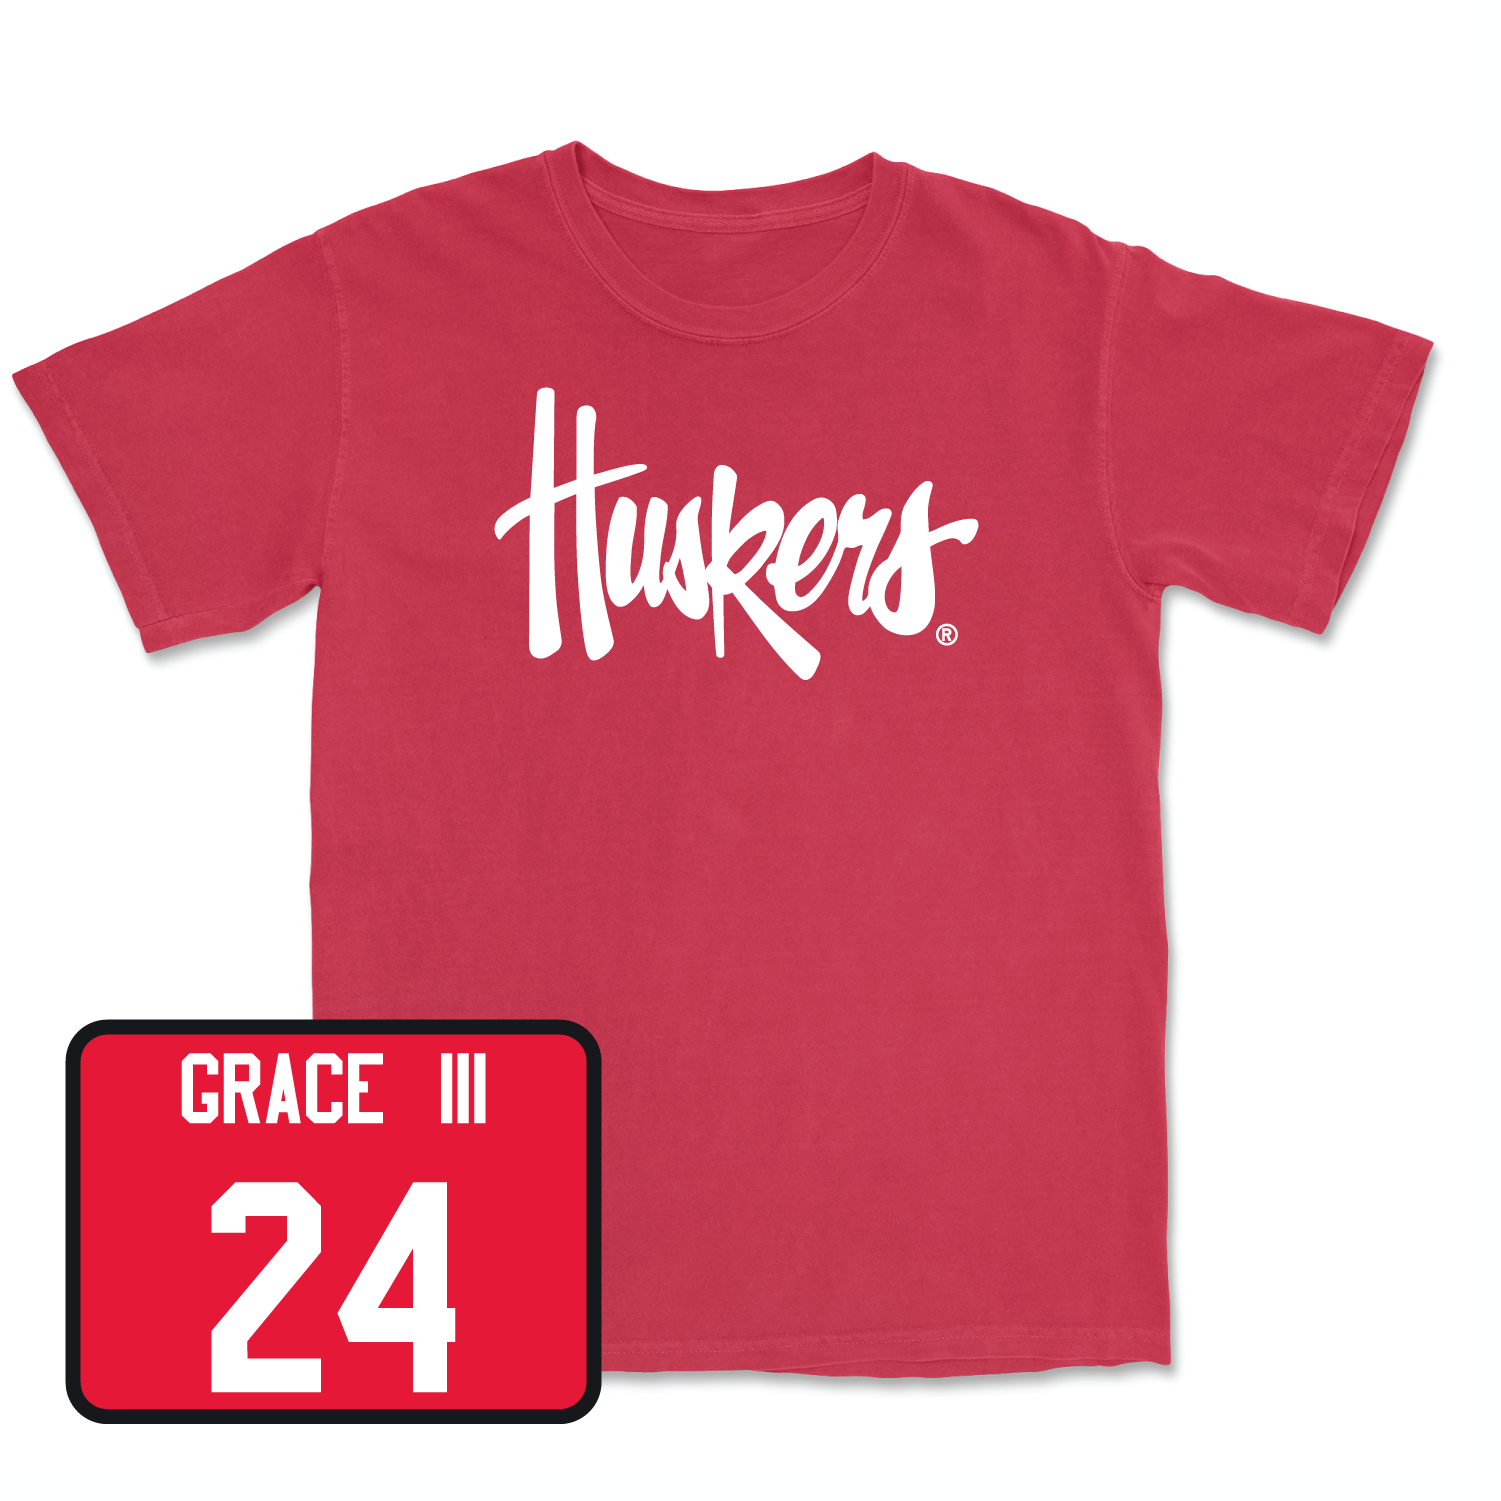 Red Men's Basketball Huskers Tee 2X-Large / Jeffrey Grace III | #24